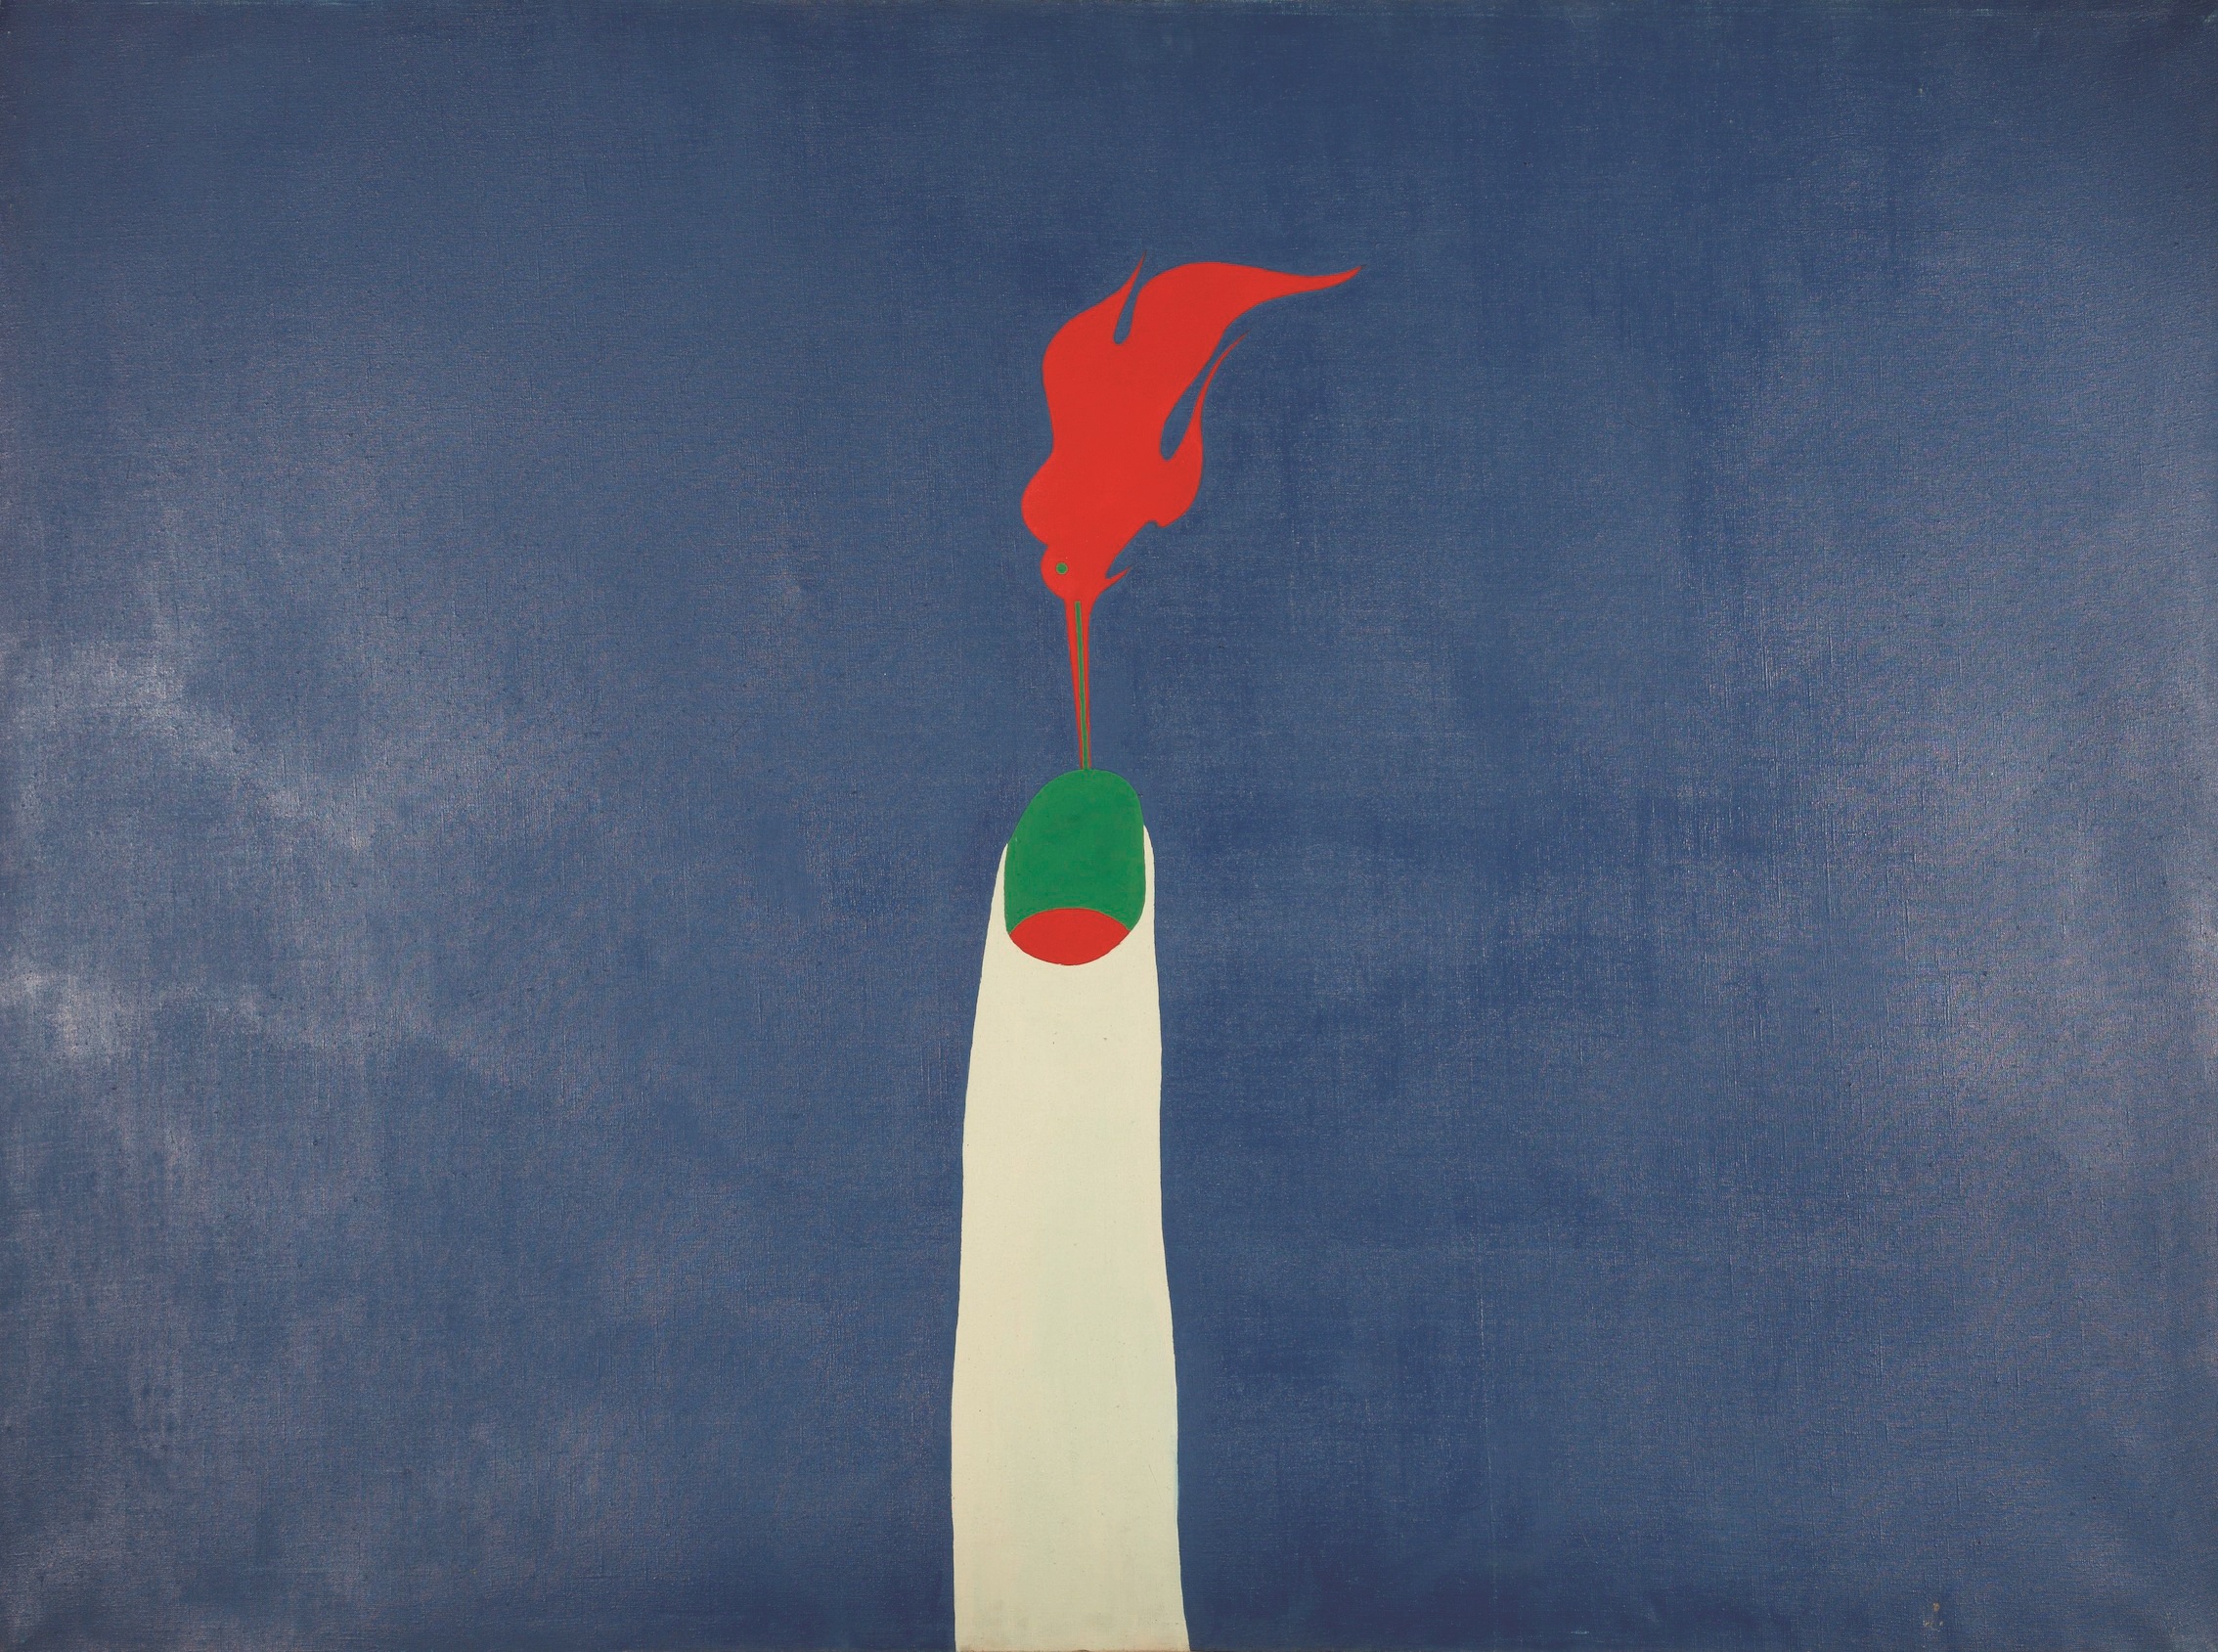 Jurry Zieliński – Spark – oil, canvas, 150 x 200 cm, 1970